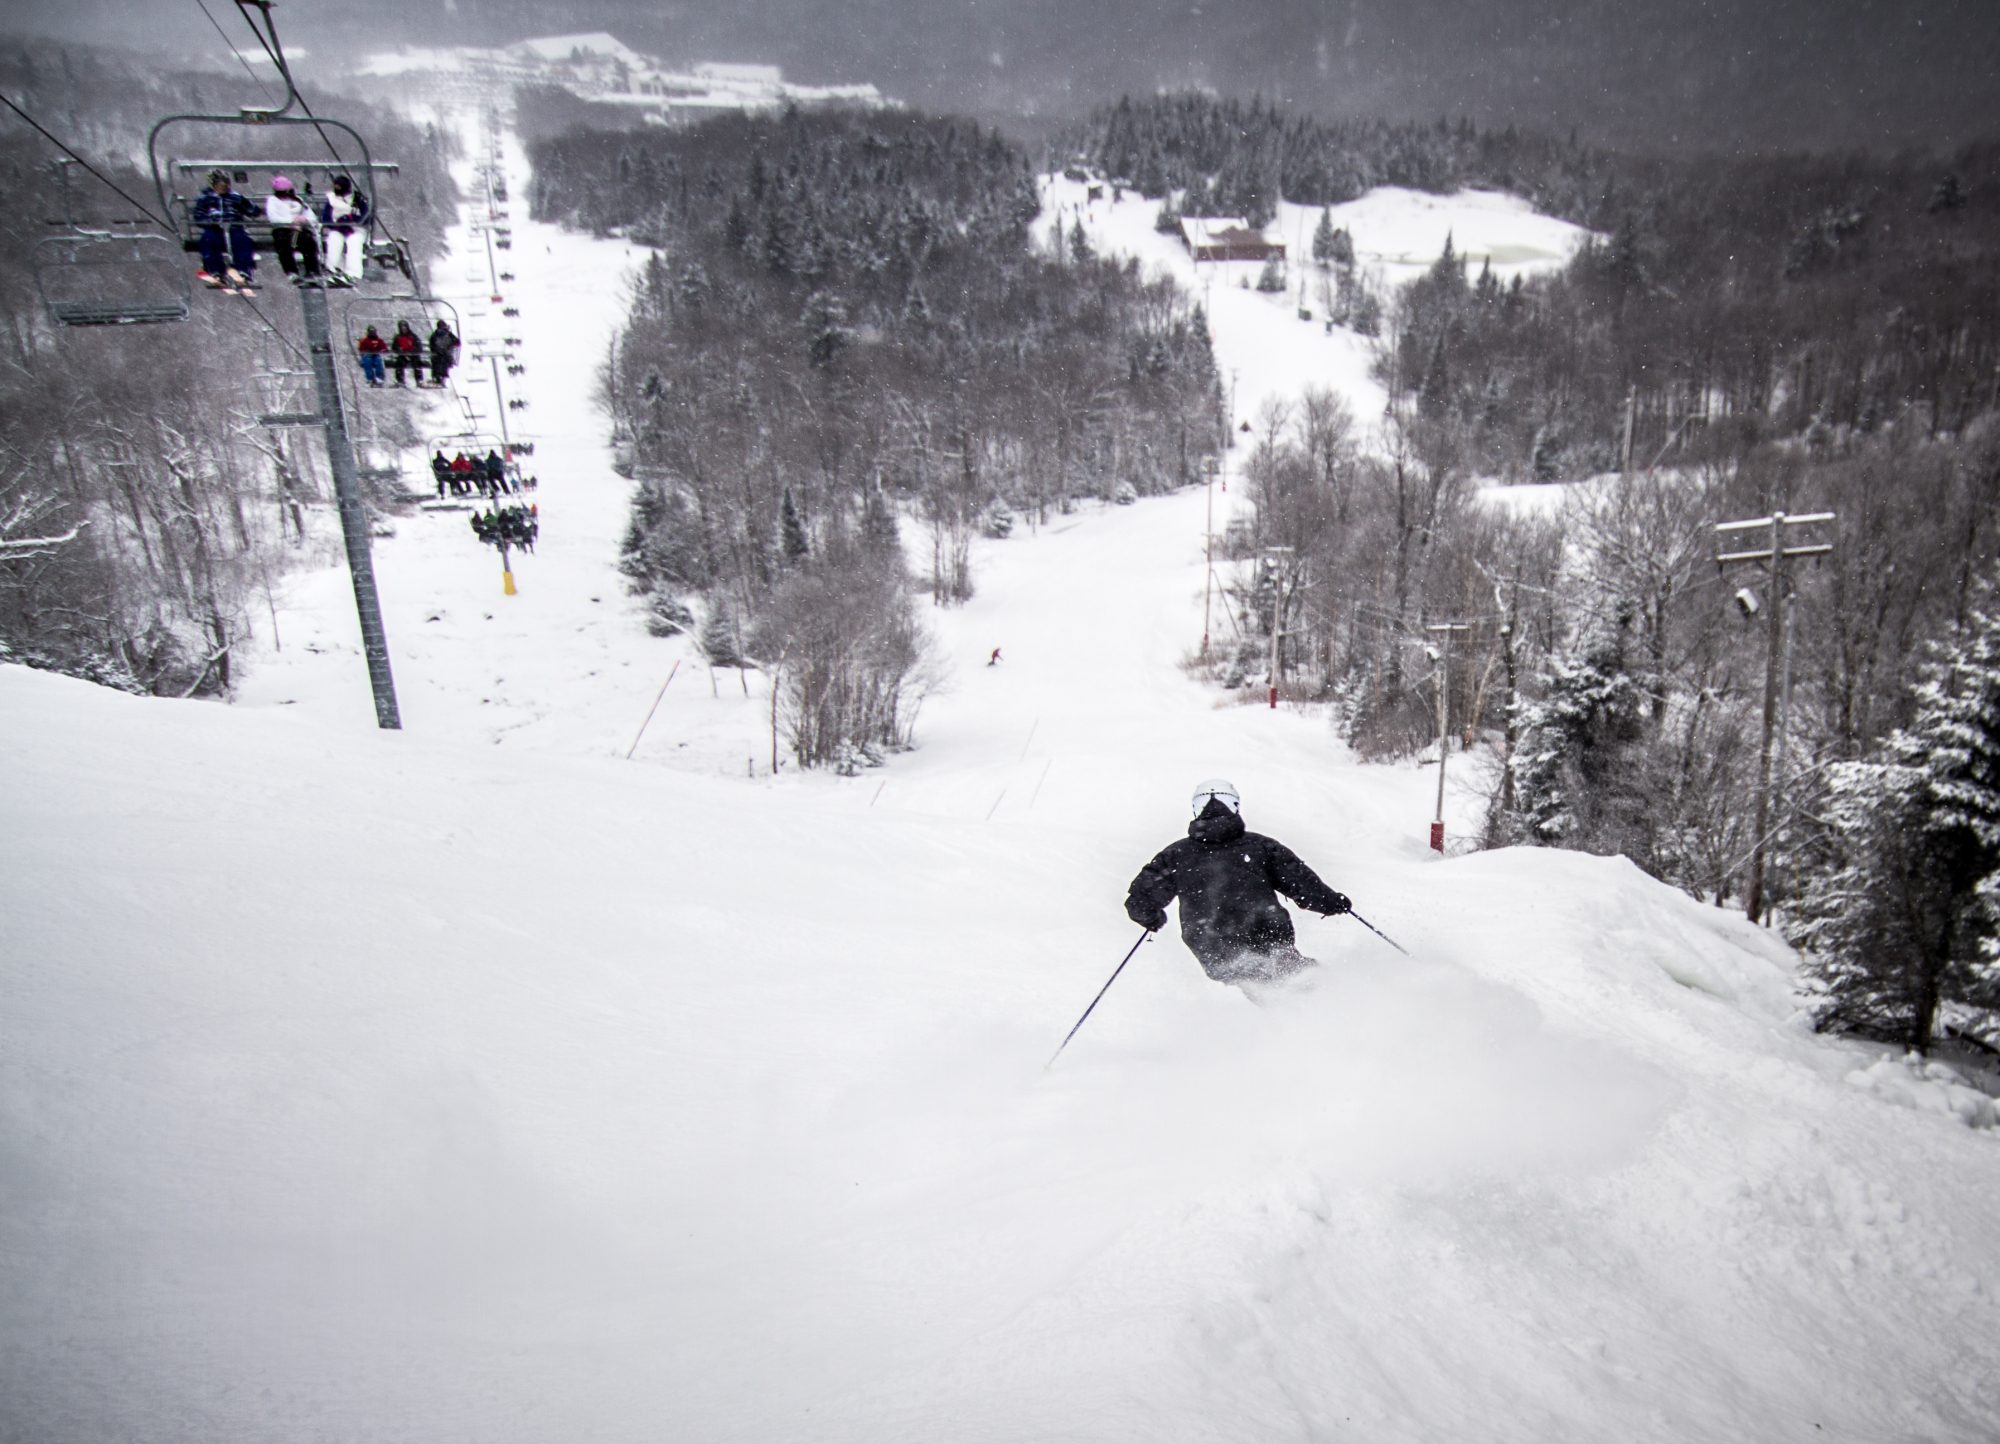 Vermont's Bolton Valley. SkiVermont.com - Over 4 million skier visits for Vermont.